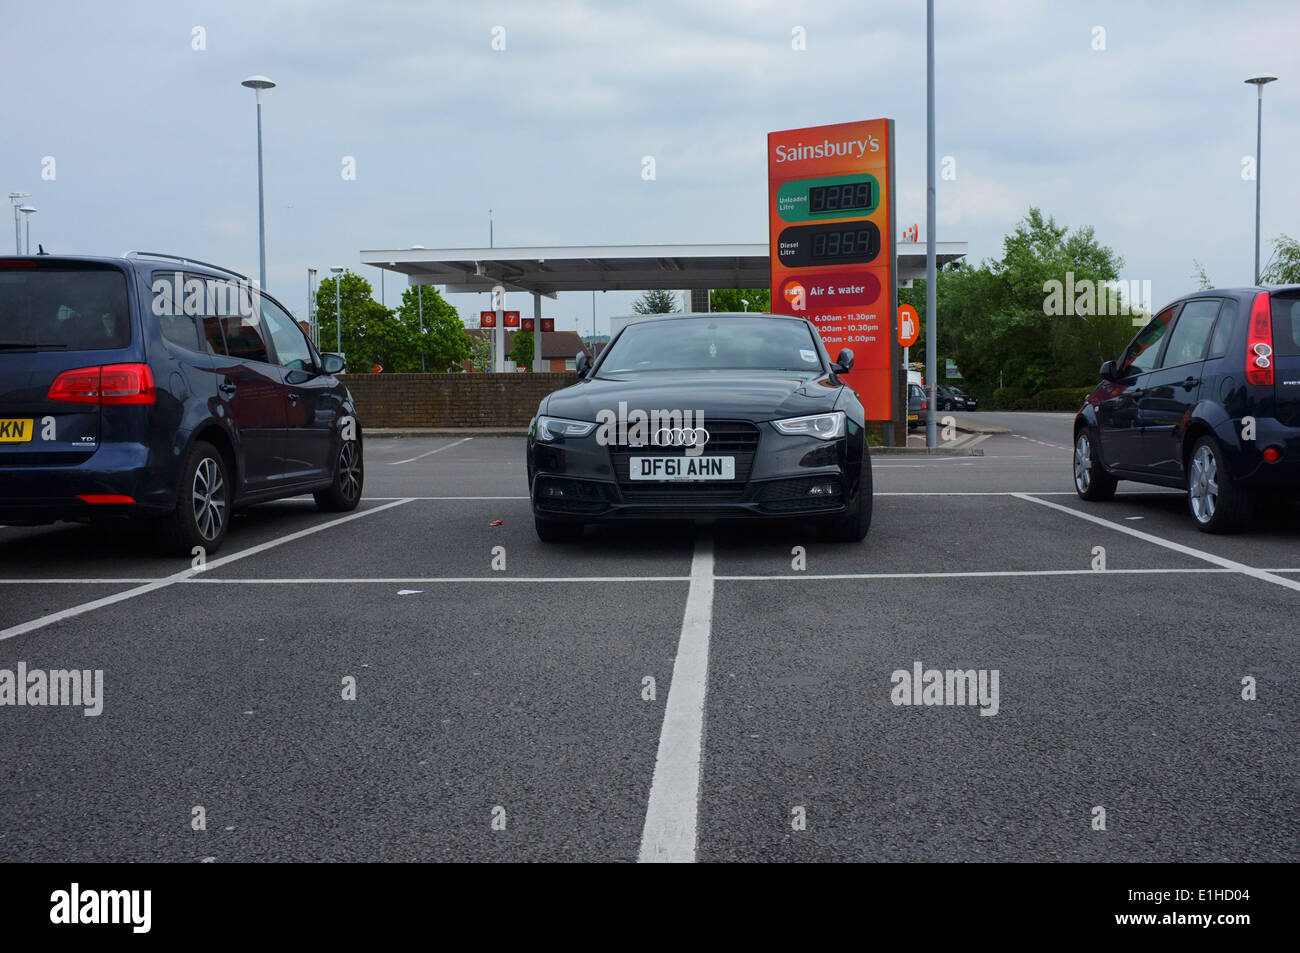 bad parking in a supermarket carpark Stock Photo